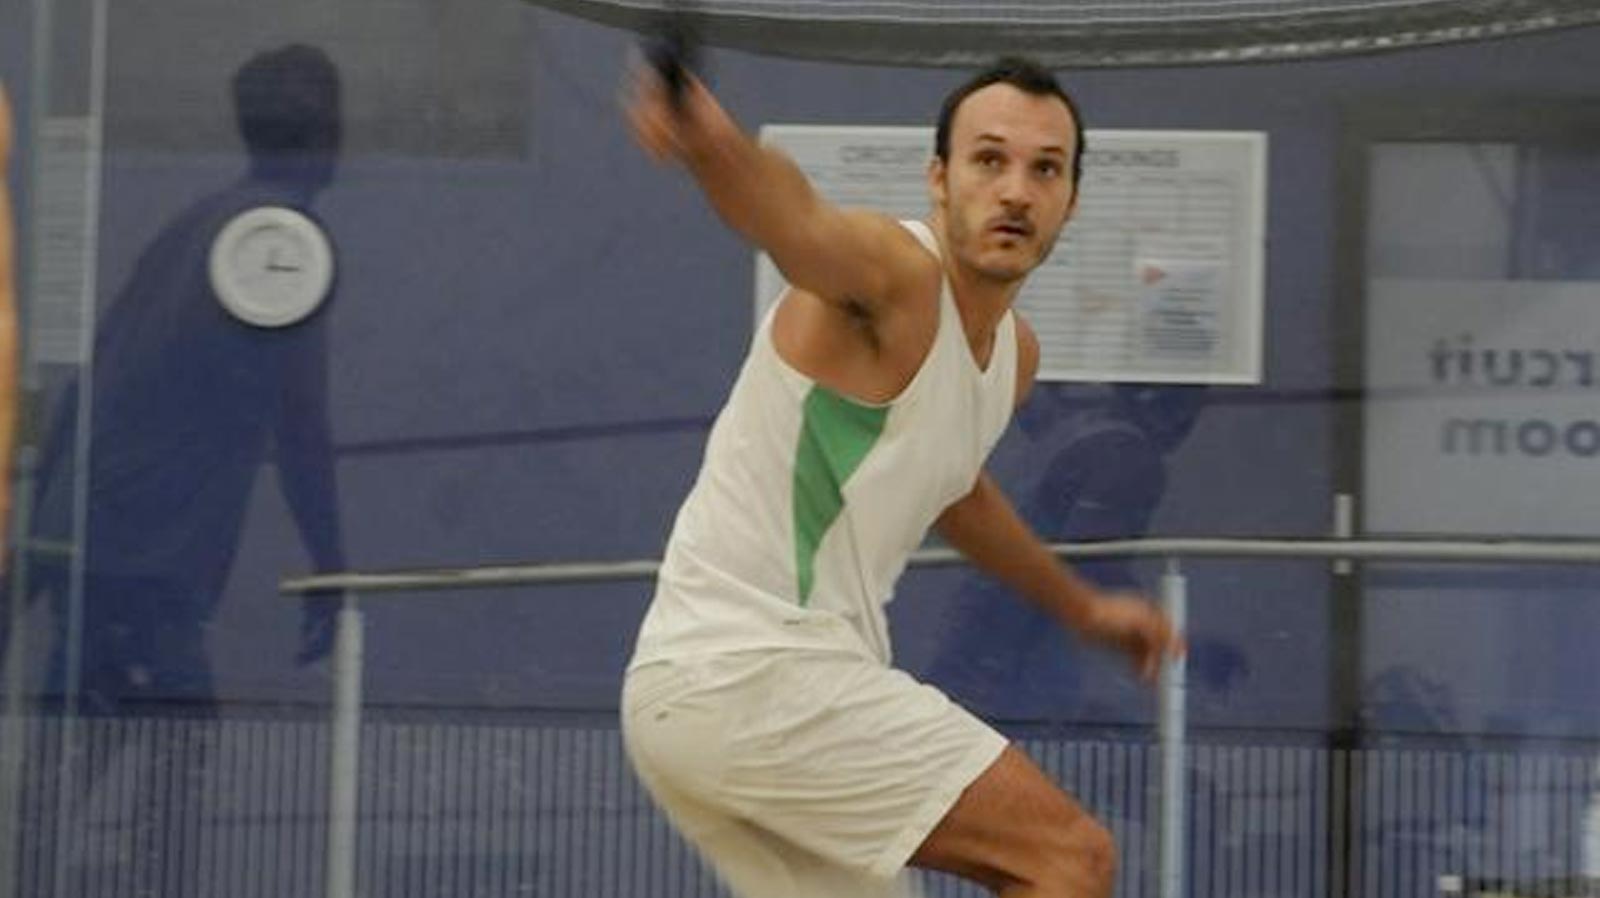 Athlete playing squash